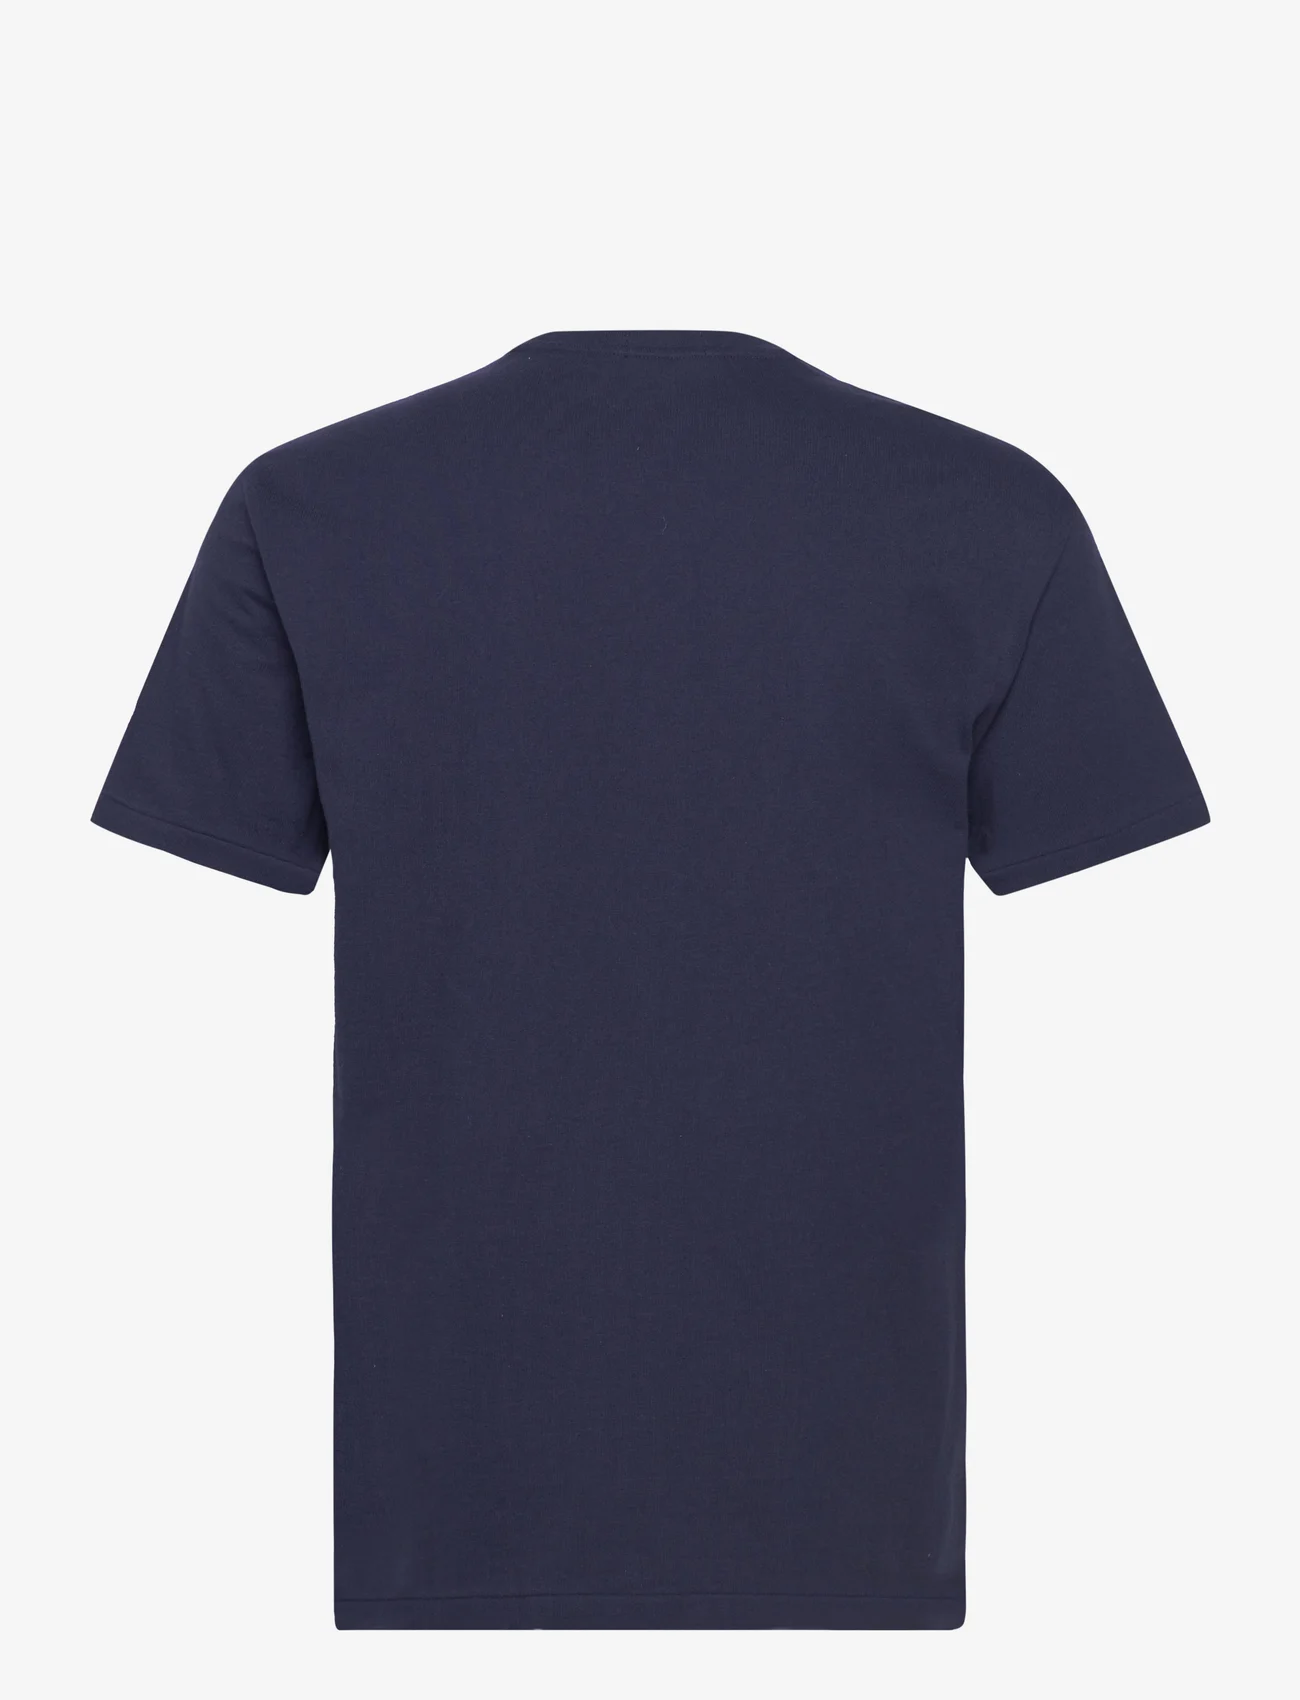 Polo Ralph Lauren - Classic Fit Logo Jersey T-Shirt - short-sleeved t-shirts - cruise navy - 1